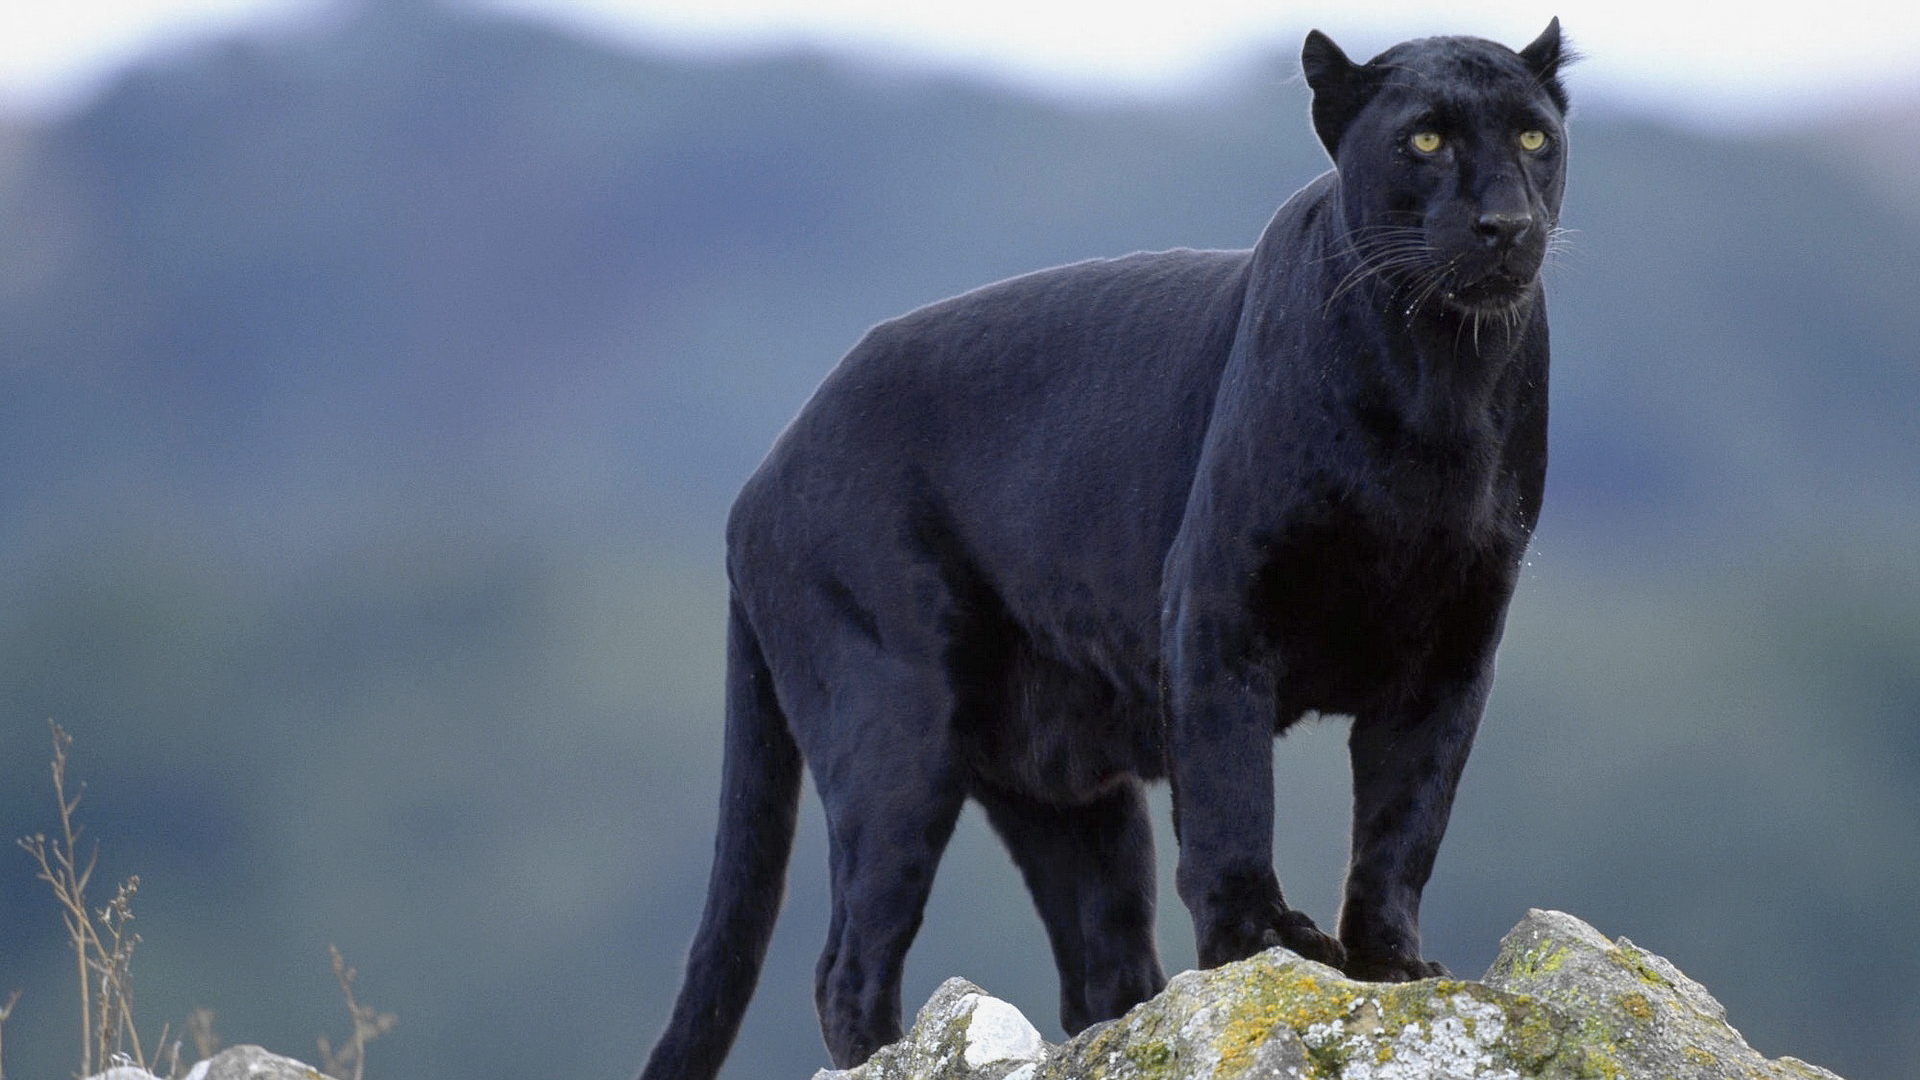 panther, black panther, cats, animal